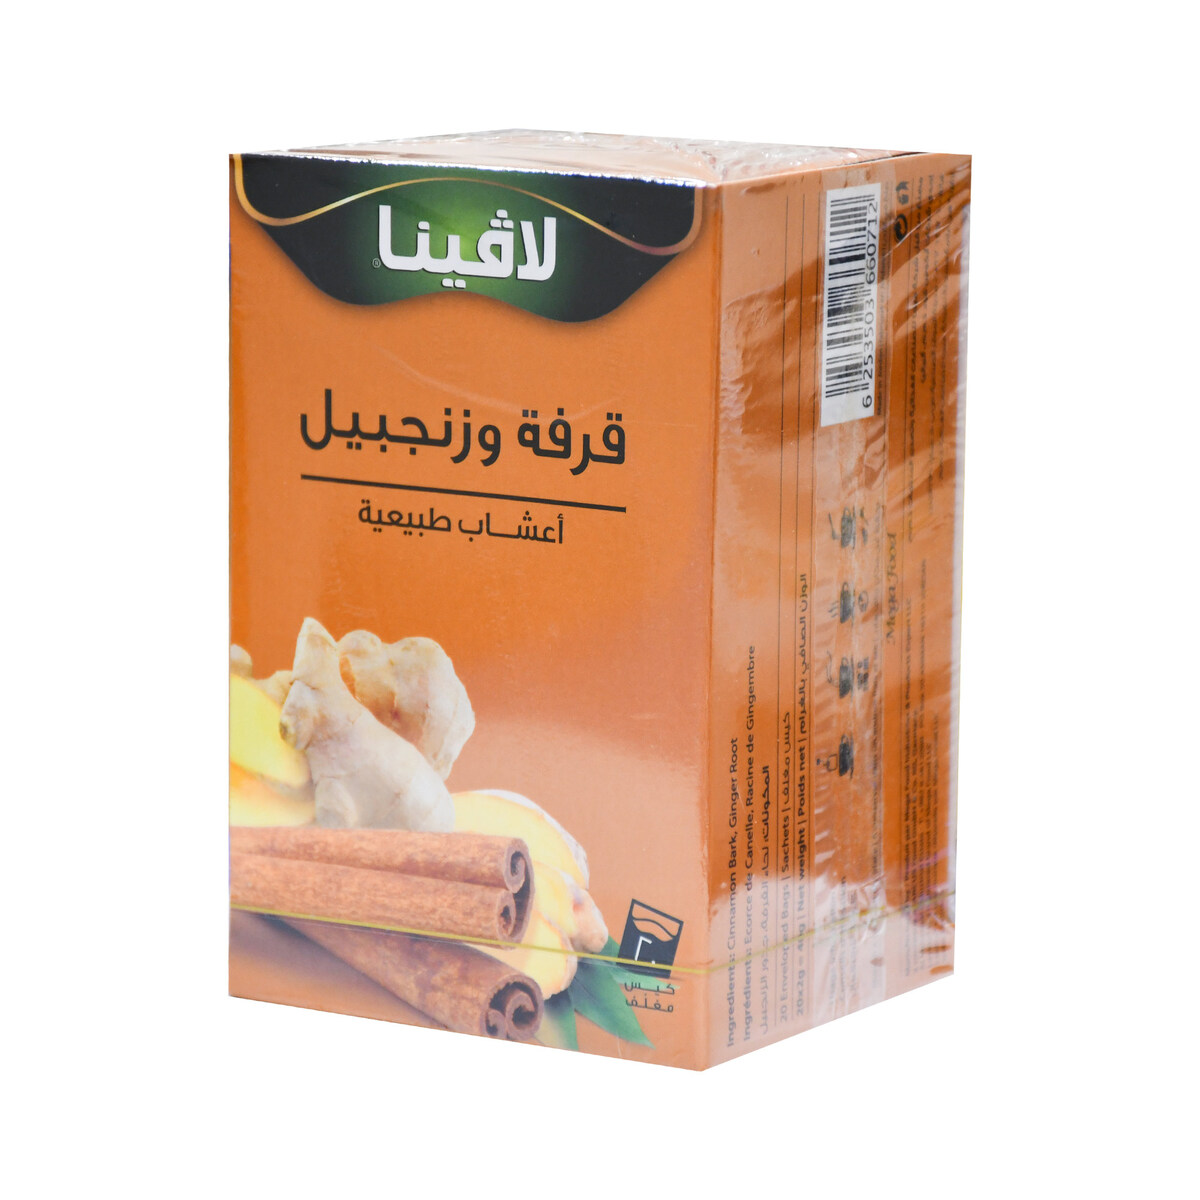 Lavina Cinnamon And Ginger Herbal Infusion Tea Bag 20 pcs